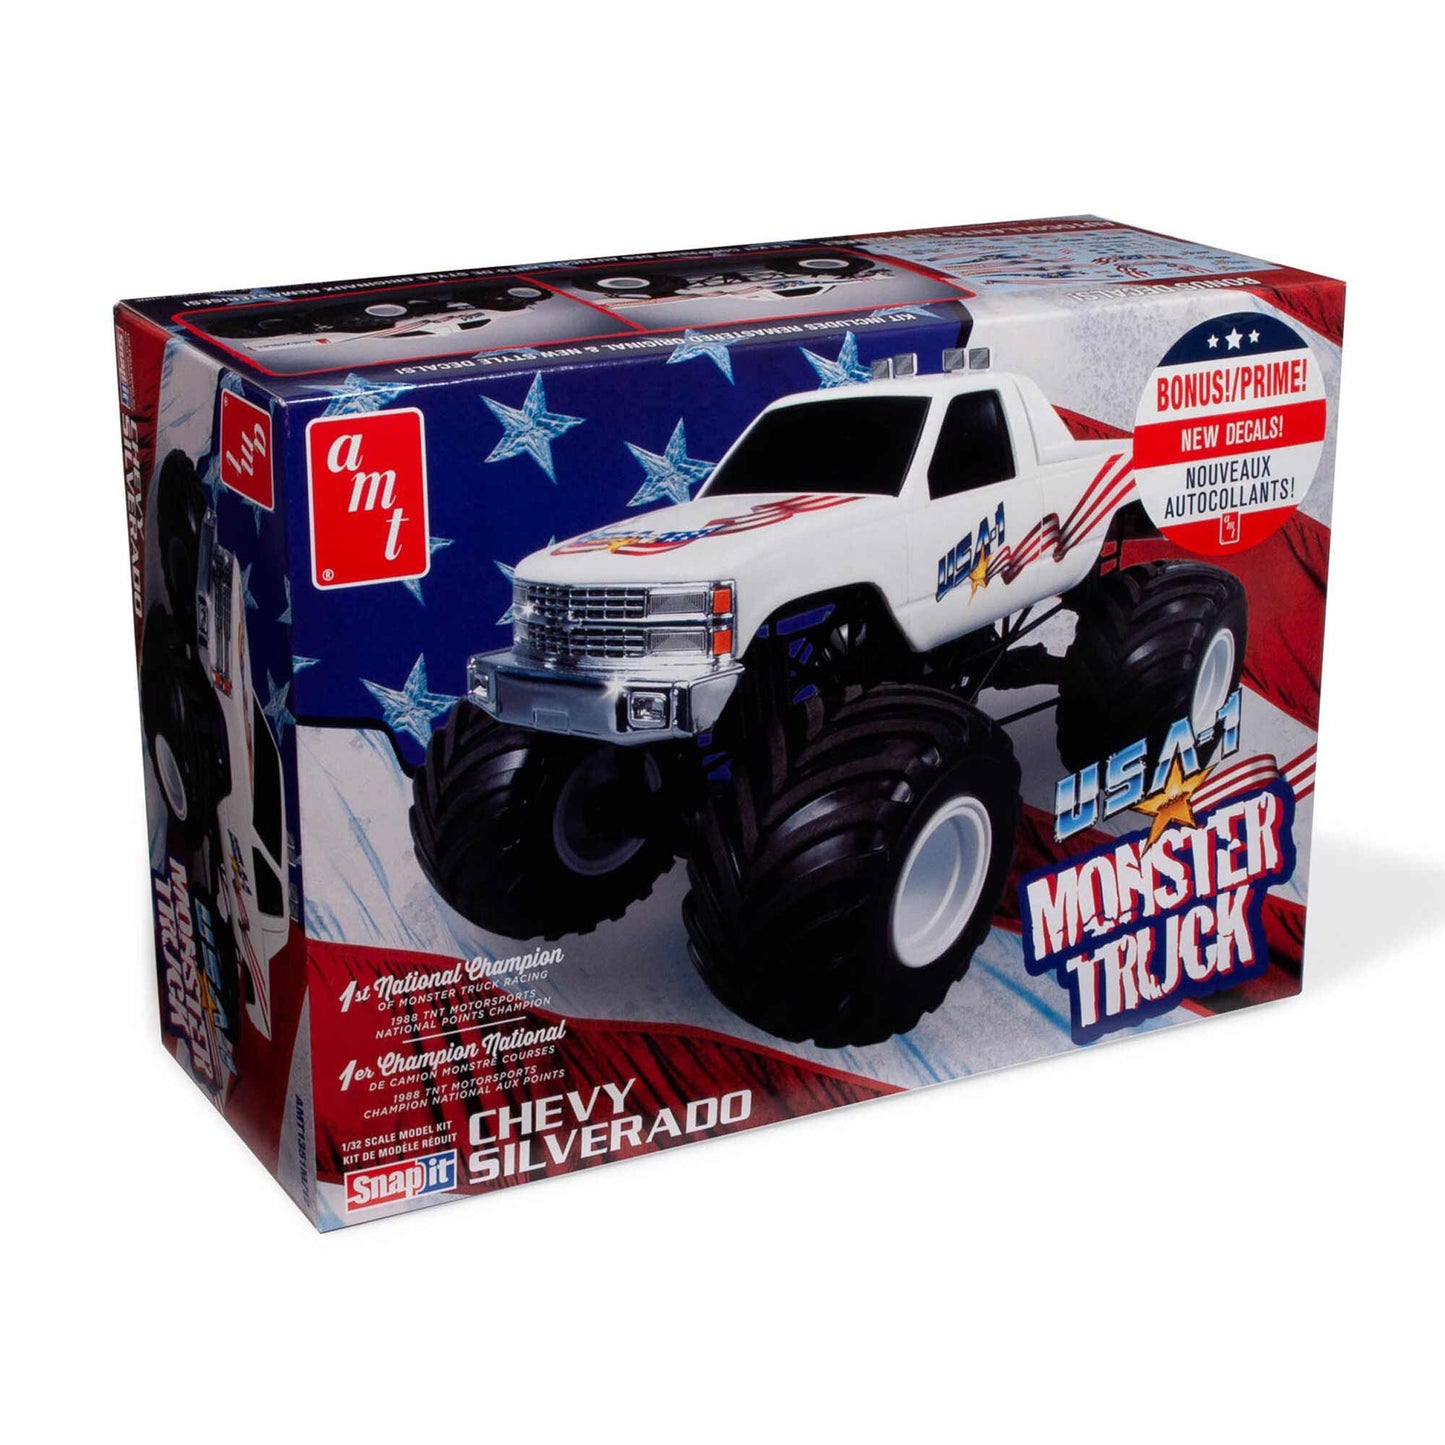 USA-1 Monster Truck 2T 1/32